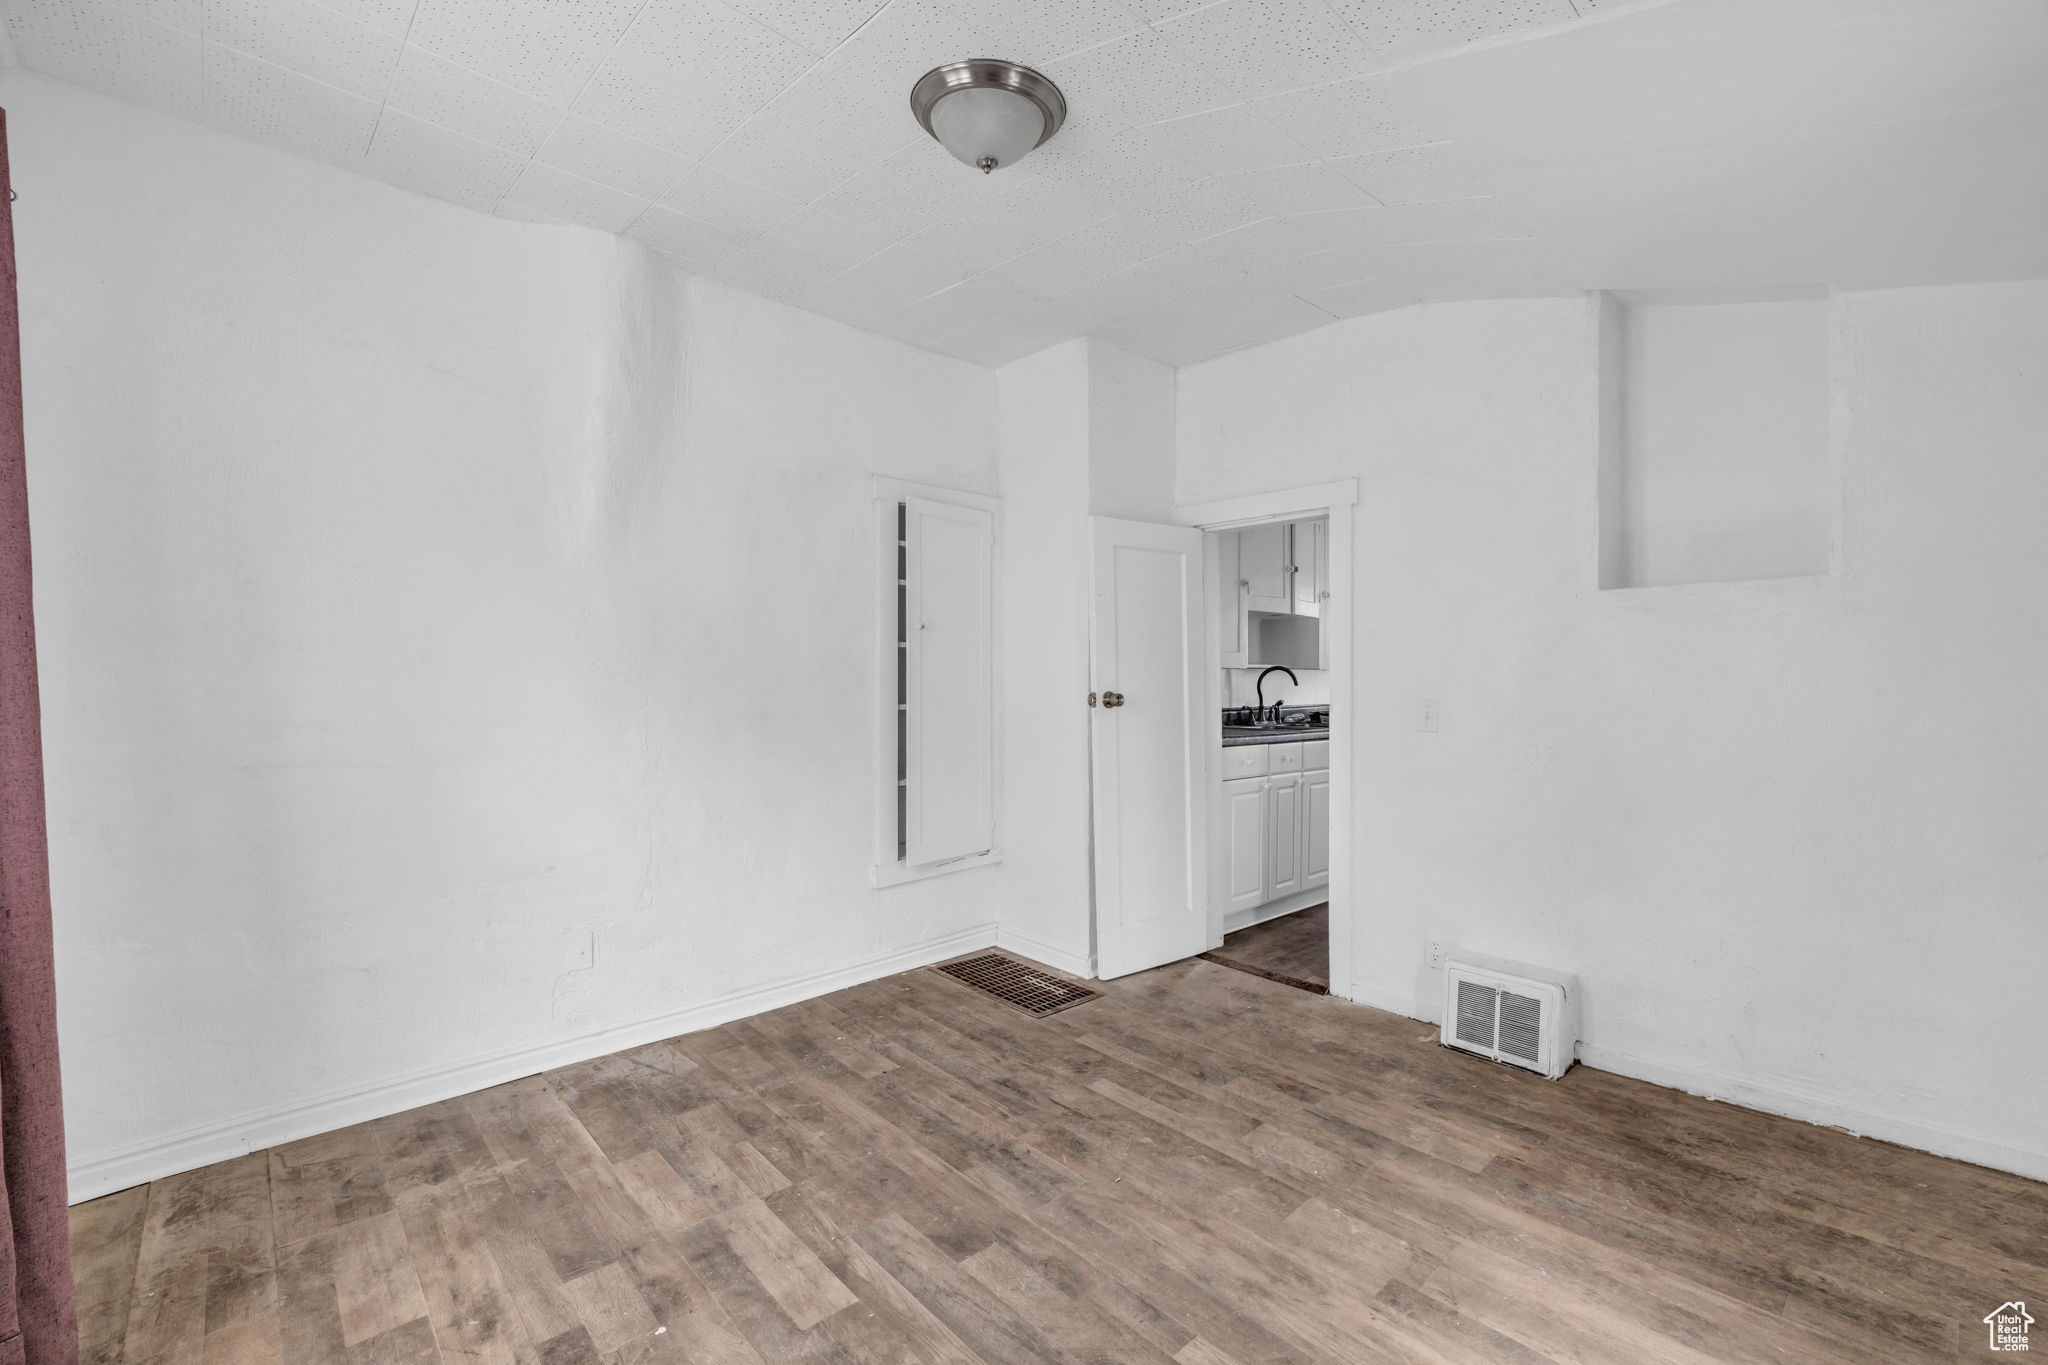 Empty room with dark hardwood / wood-style floors and sink